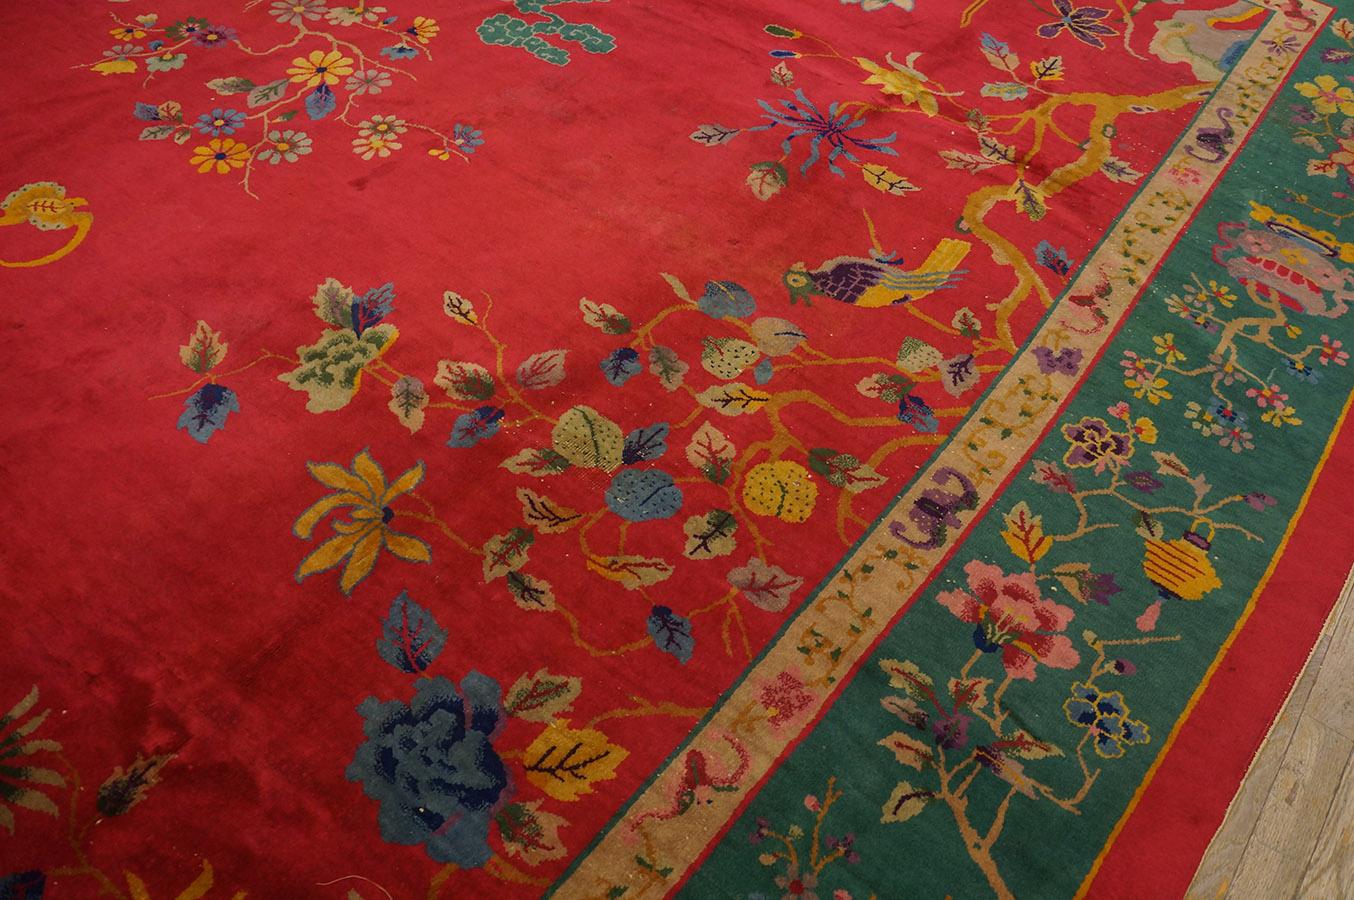 1920s Chinese Art Deco Carpet ( 9' x 11' 8'' - 275 x 355 cm ) For Sale 4